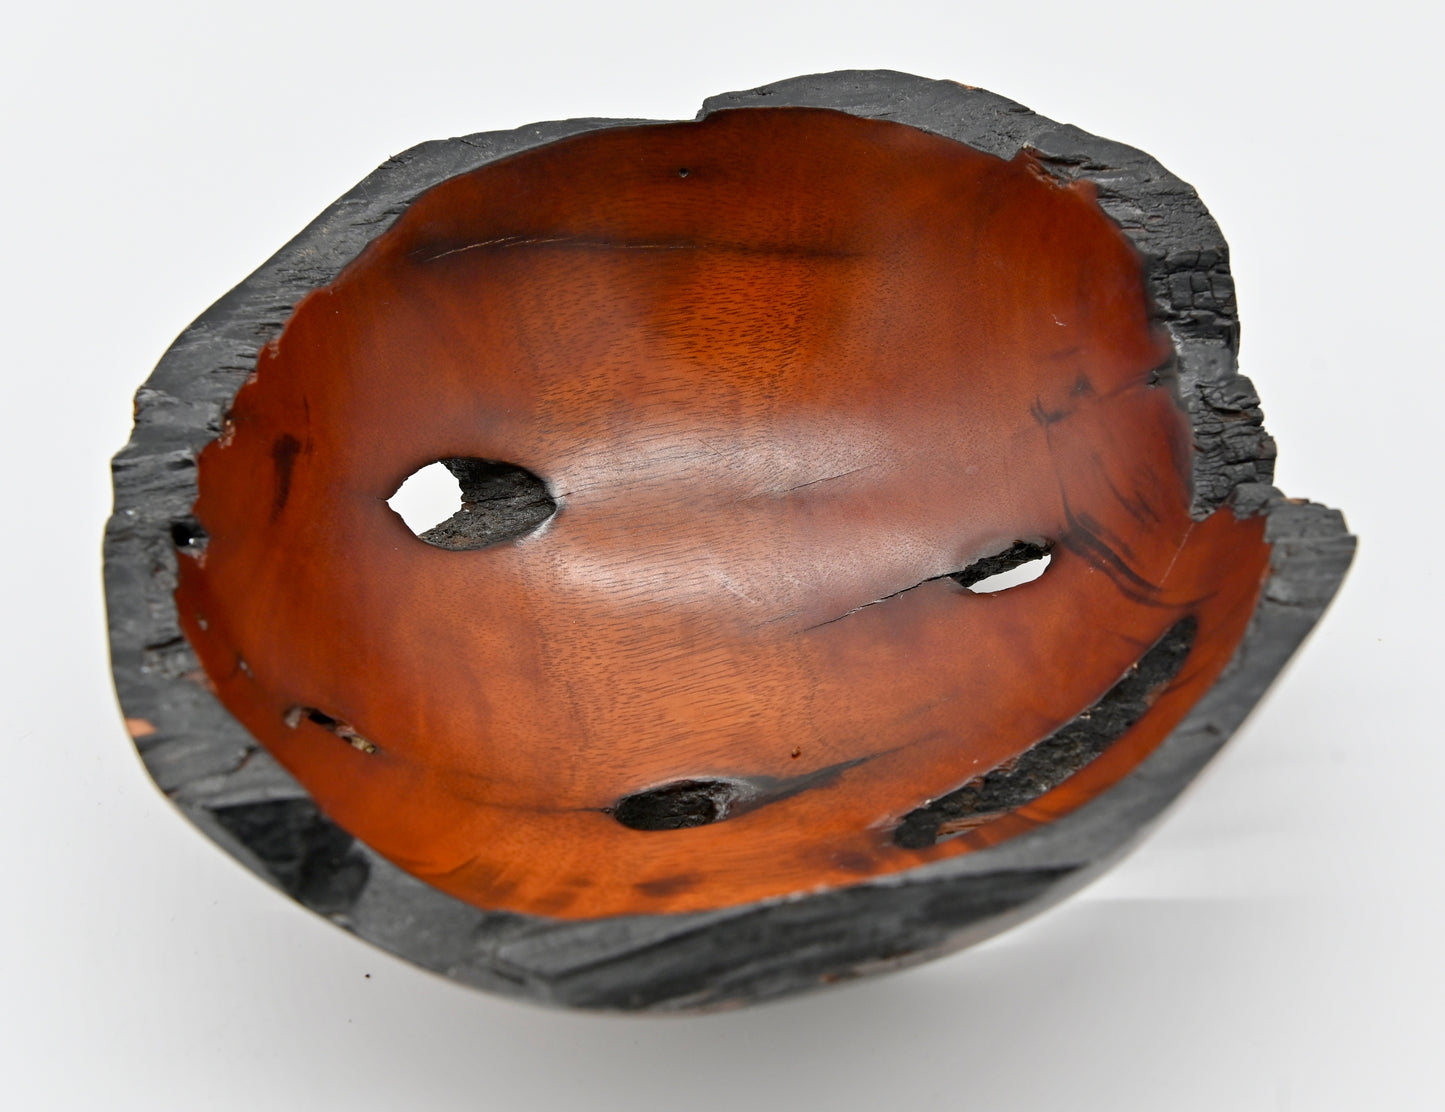 A Stunning Piece of Art  Rich Dark Cherry Burl Wood Bowl  Natural Edge Burls  Knots Bark Inclusions Holes Cracks